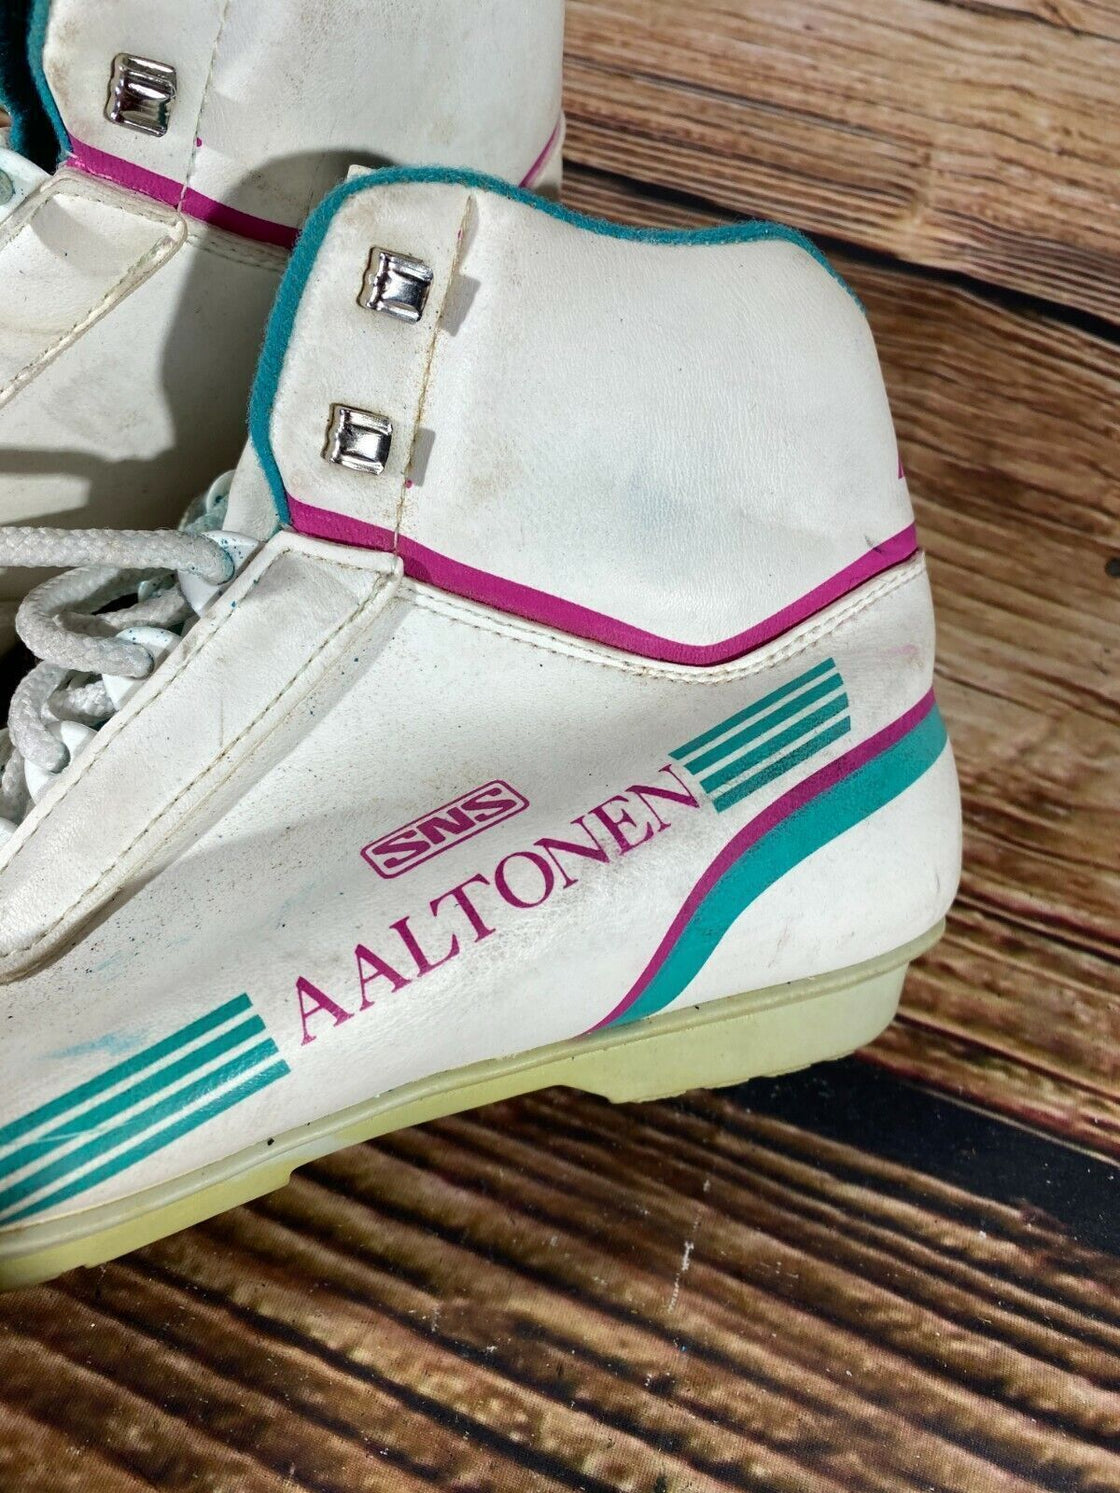 AALTONEN Nordic Cross Country Ski Boots Ladies Size EU38 US6 SNS Old Profile